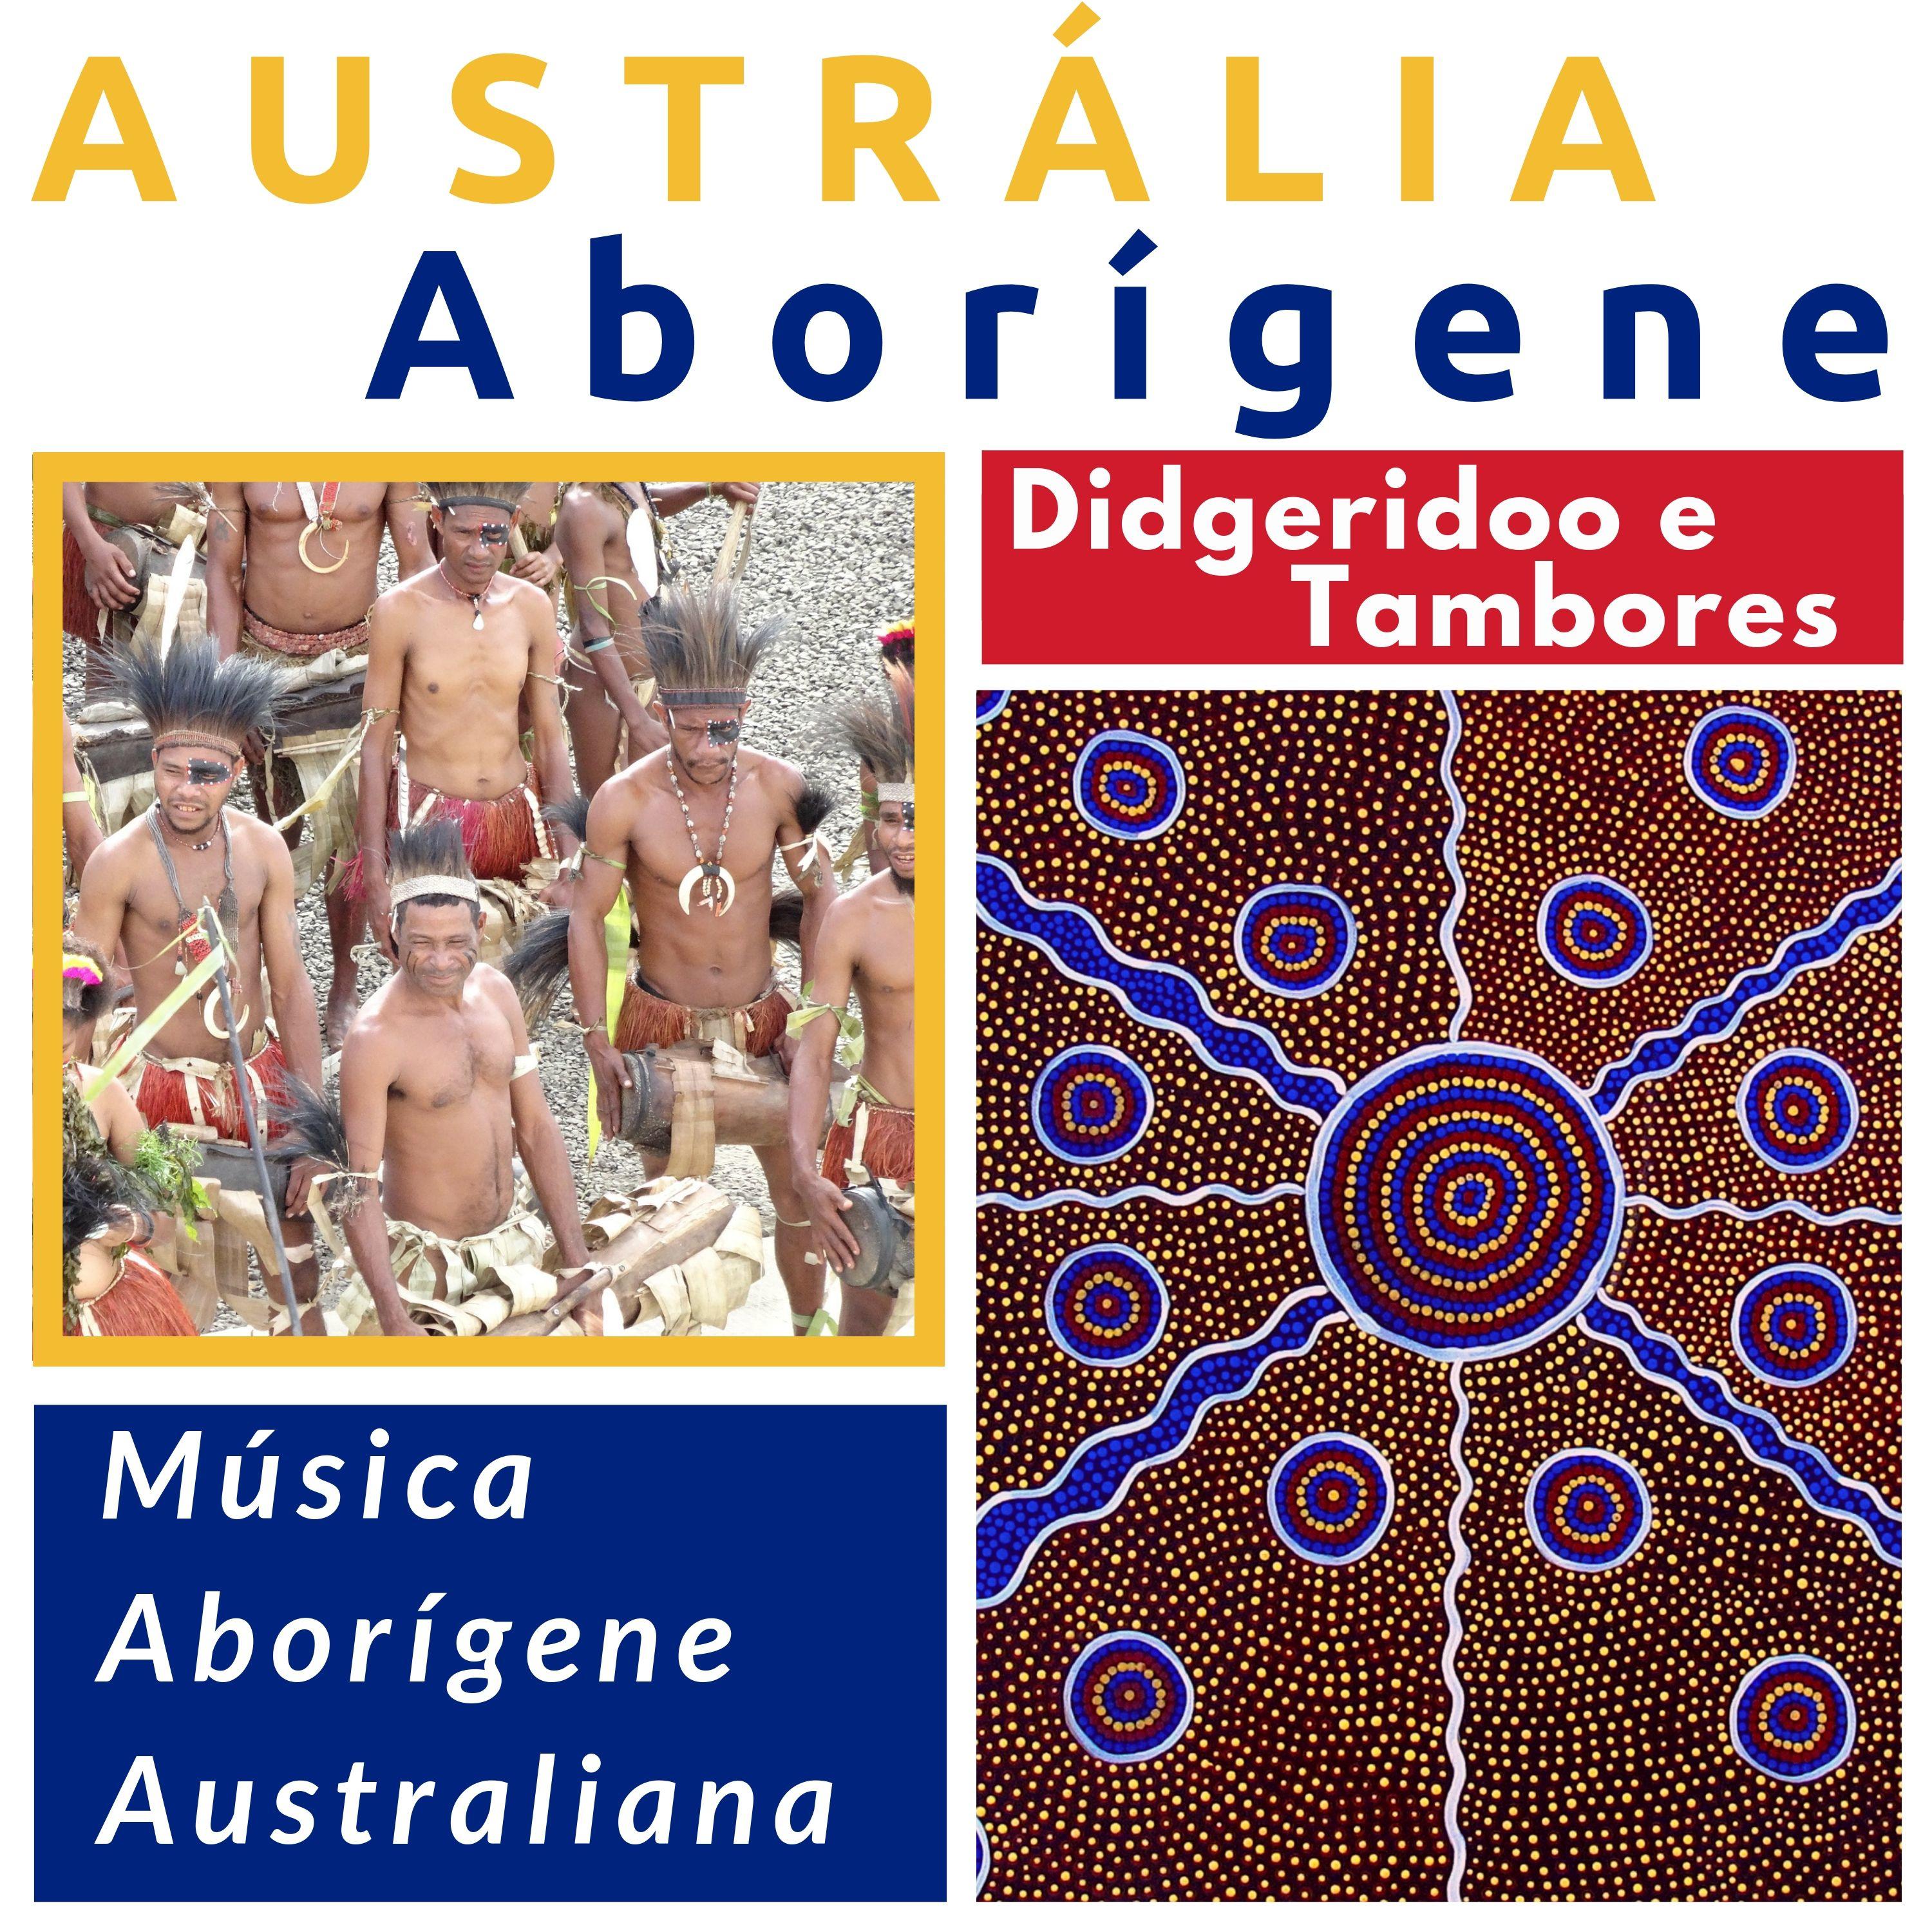 Austrália Aborígene